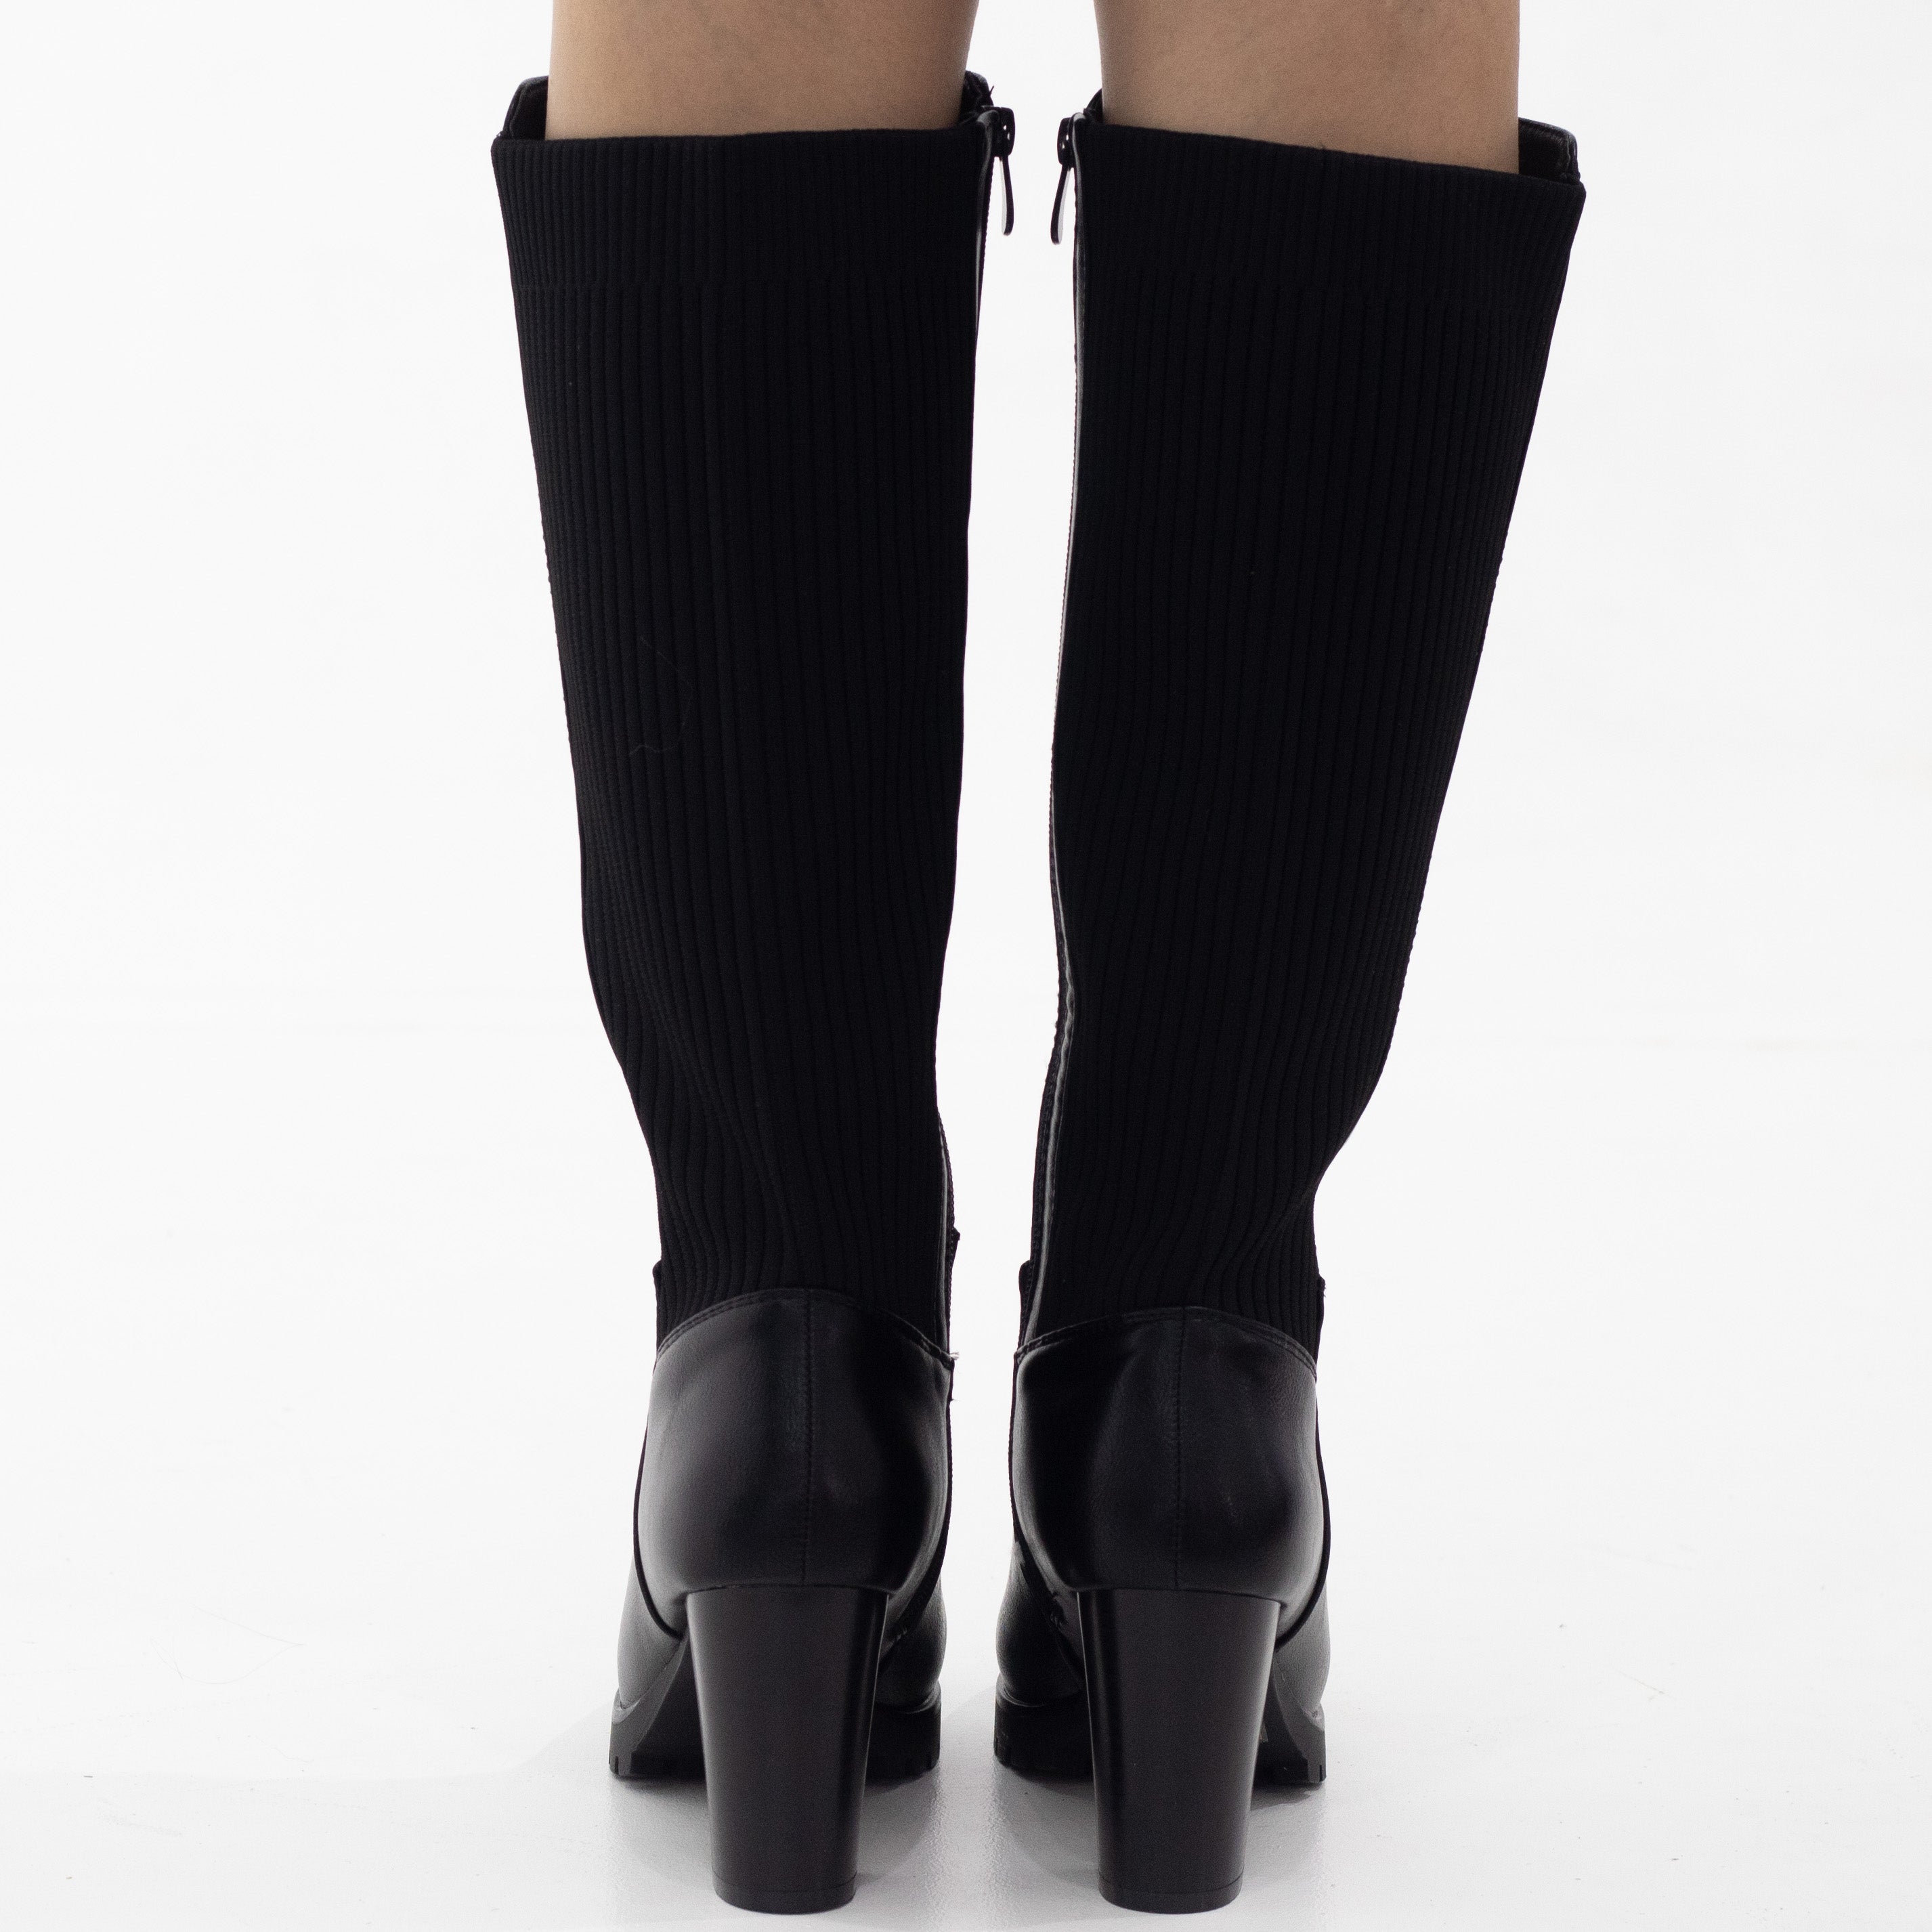 Black knee high with sock mat boots 8cm heel yahira